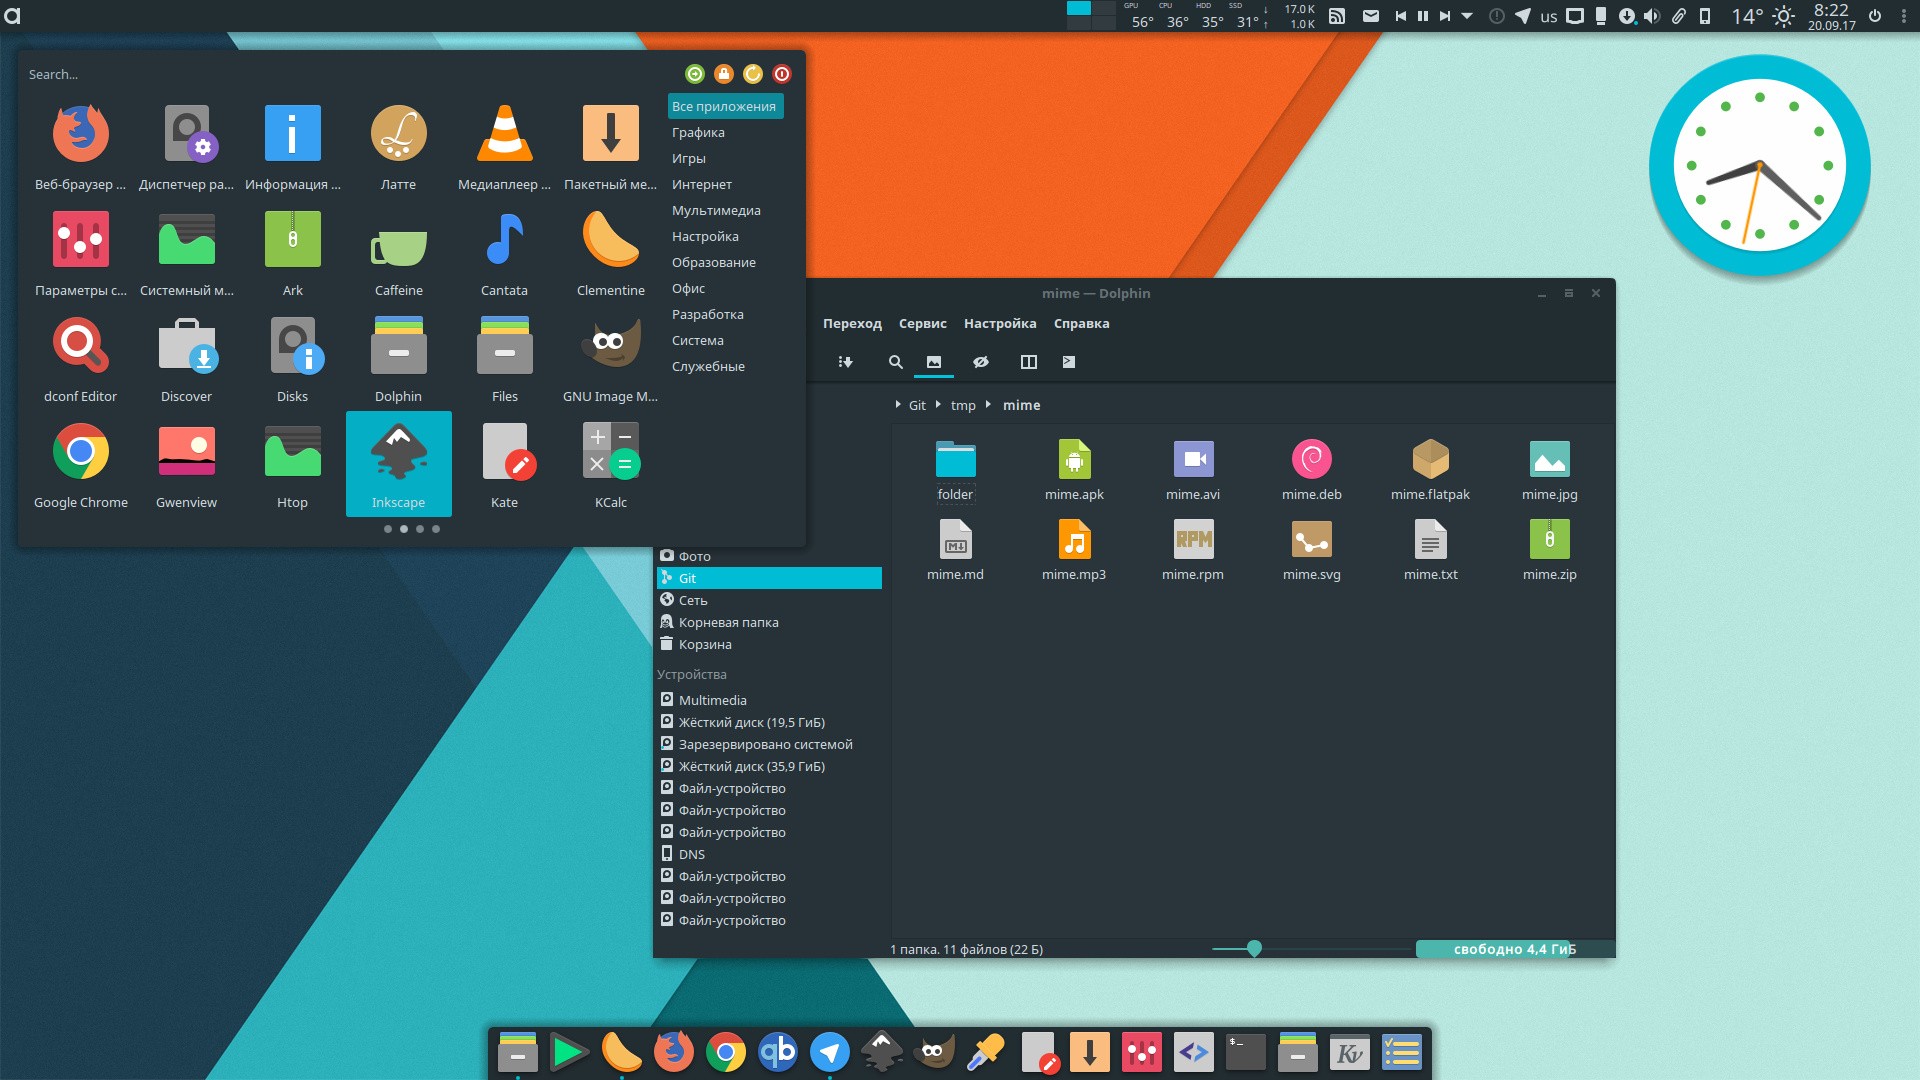 Beautify Your Kde Plasma 5 Desktop Environment With Freshly Ported Adapta Theme